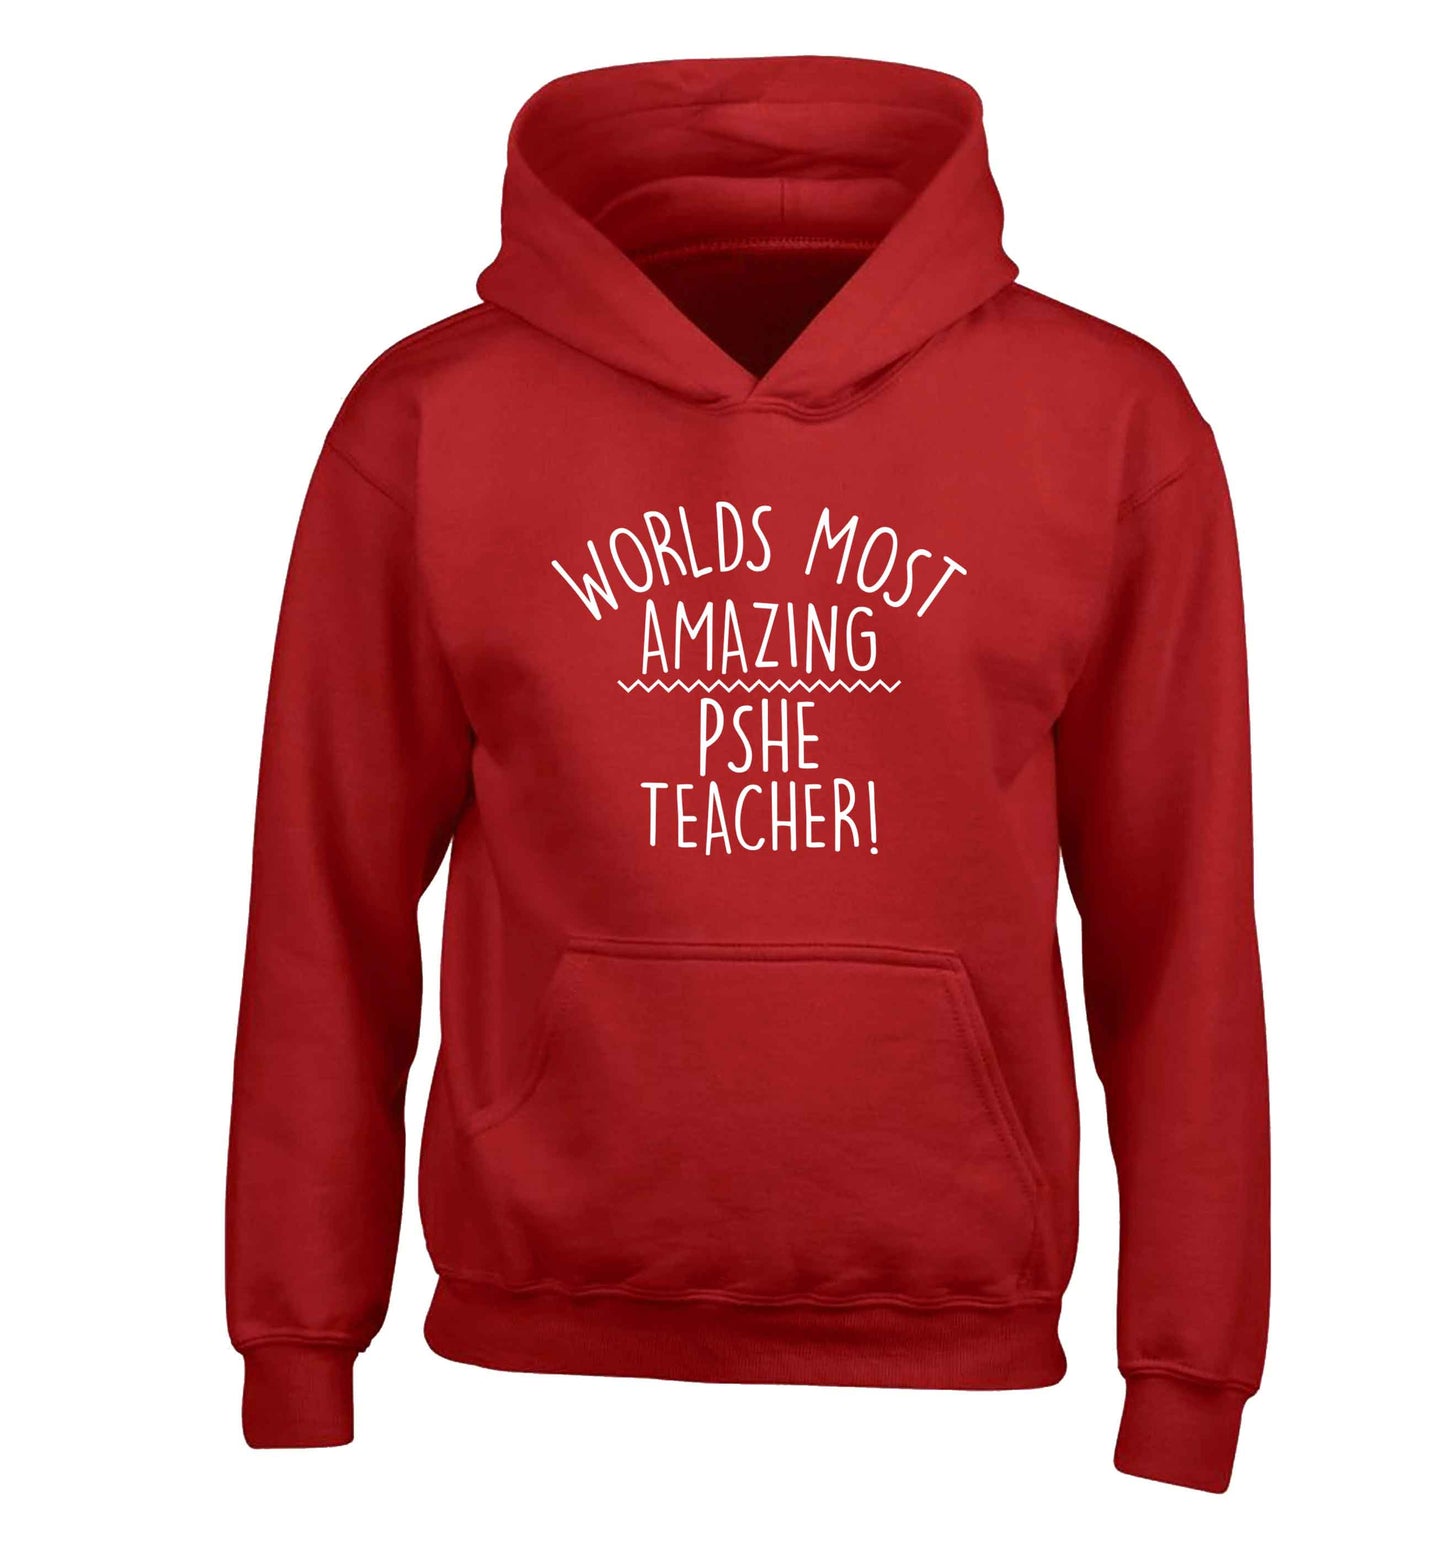 Worlds most amazing PHSE teacher children's red hoodie 12-13 Years